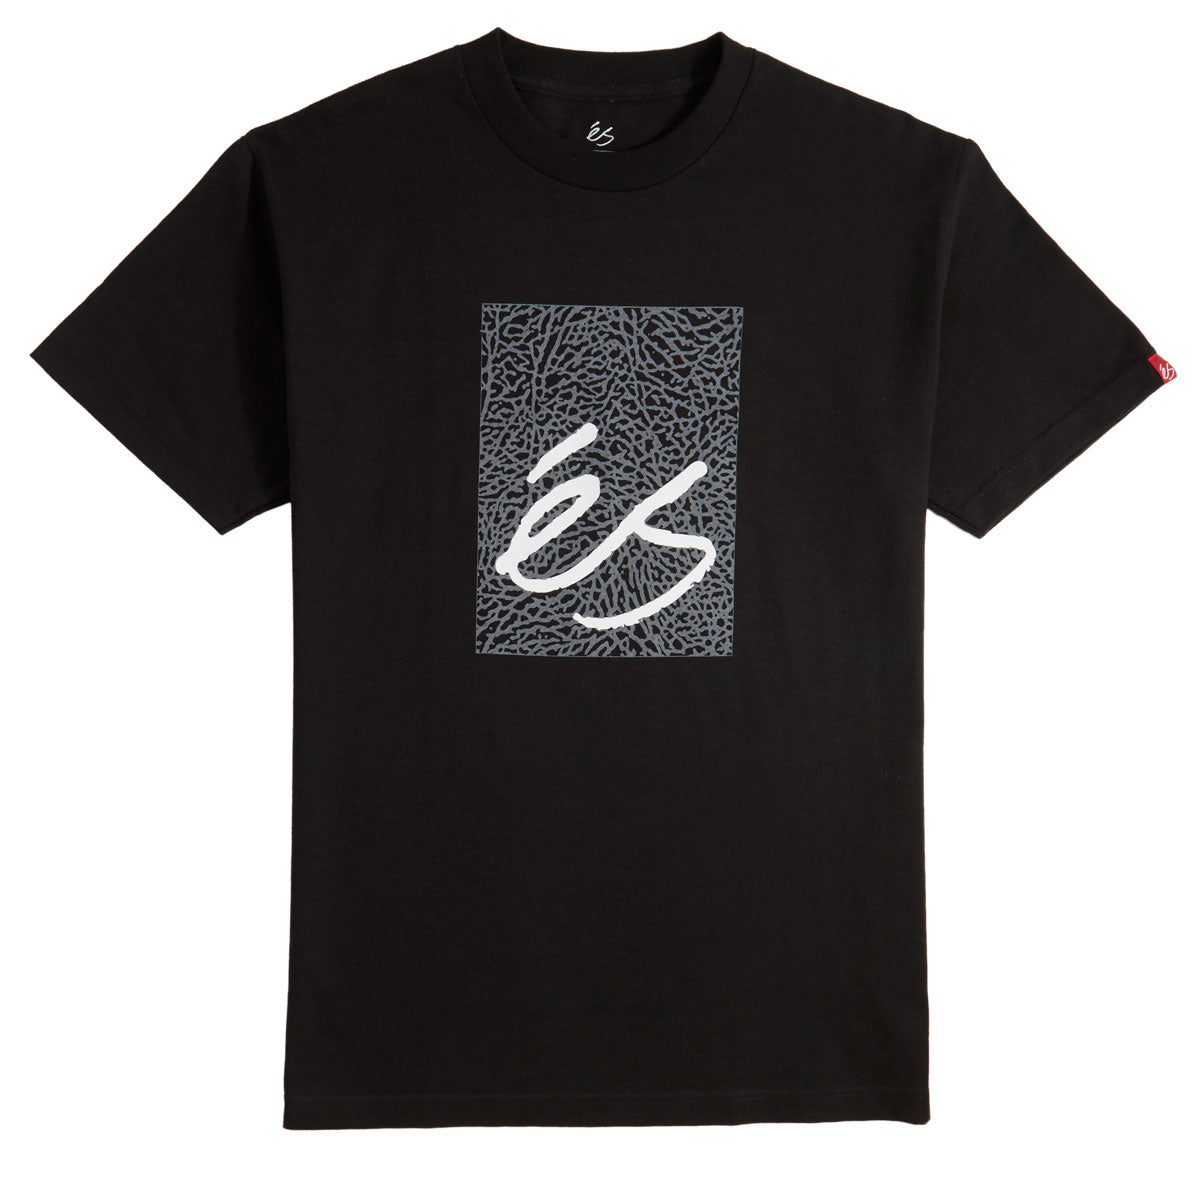 eS Main Block T-Shirt - Black image 1